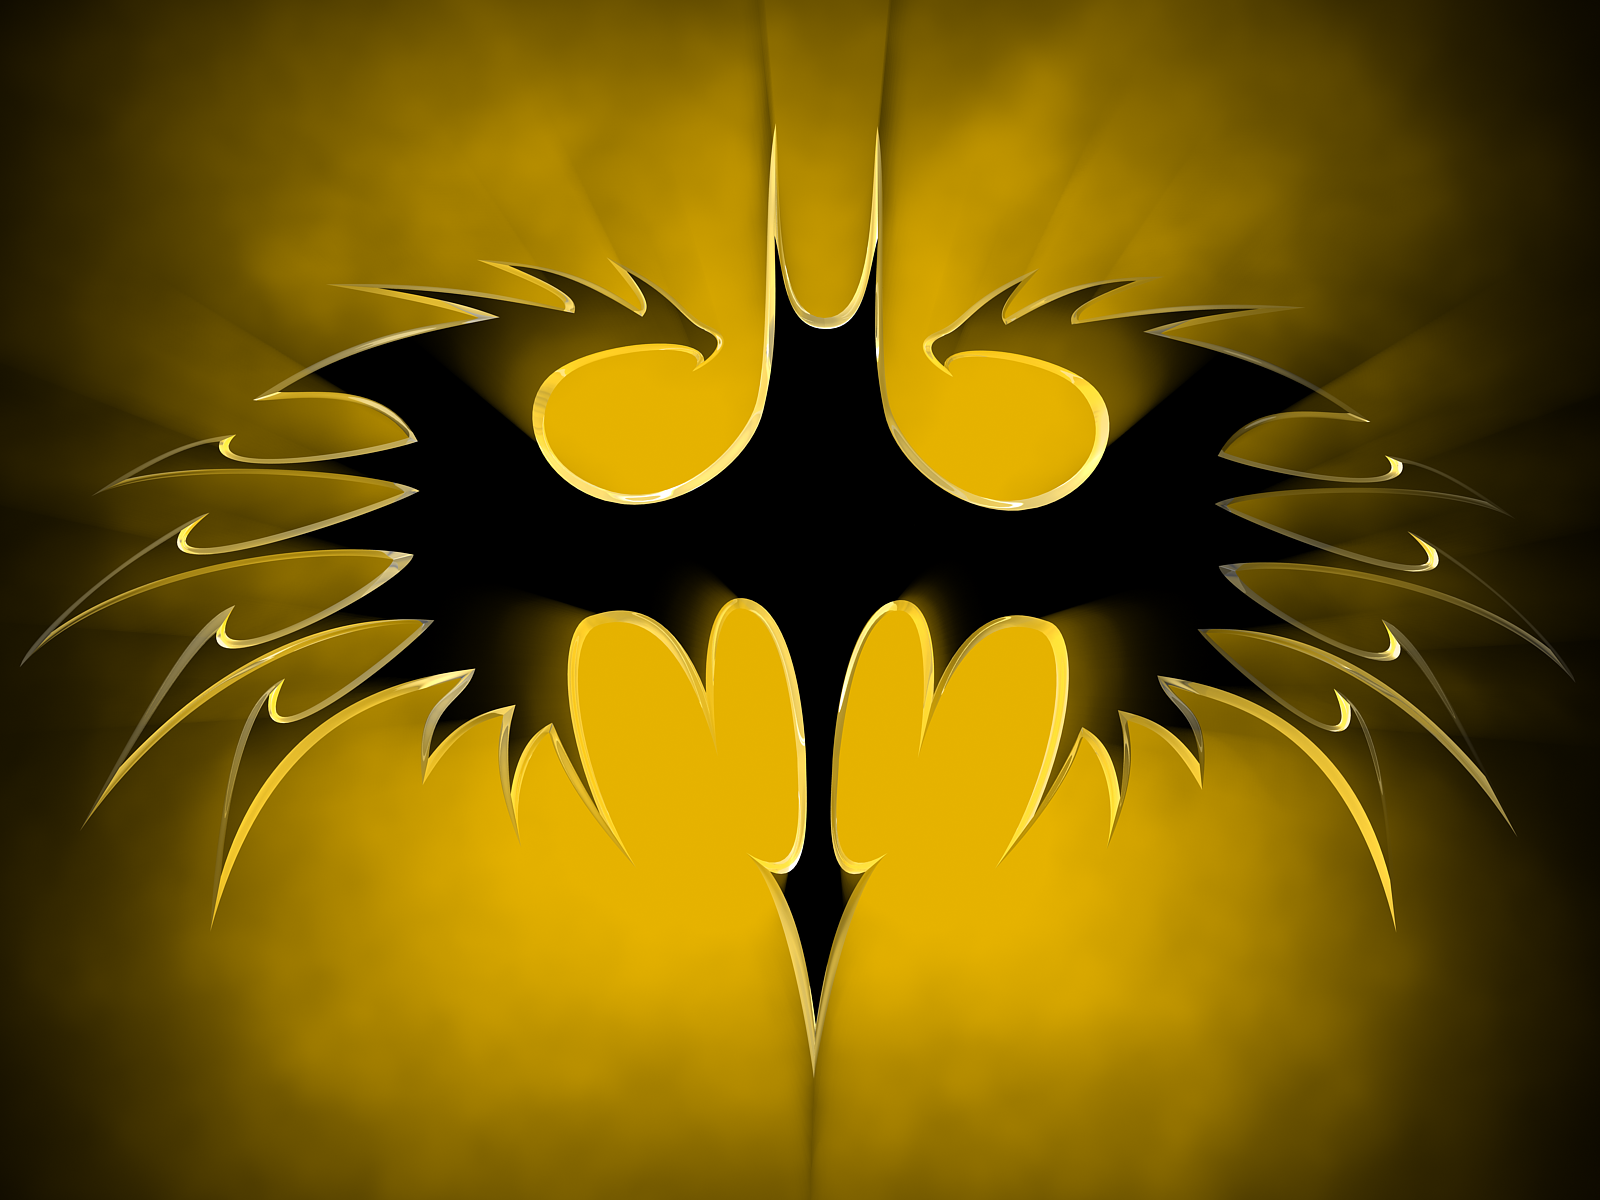 50+] New Batman Logo Wallpaper - WallpaperSafari